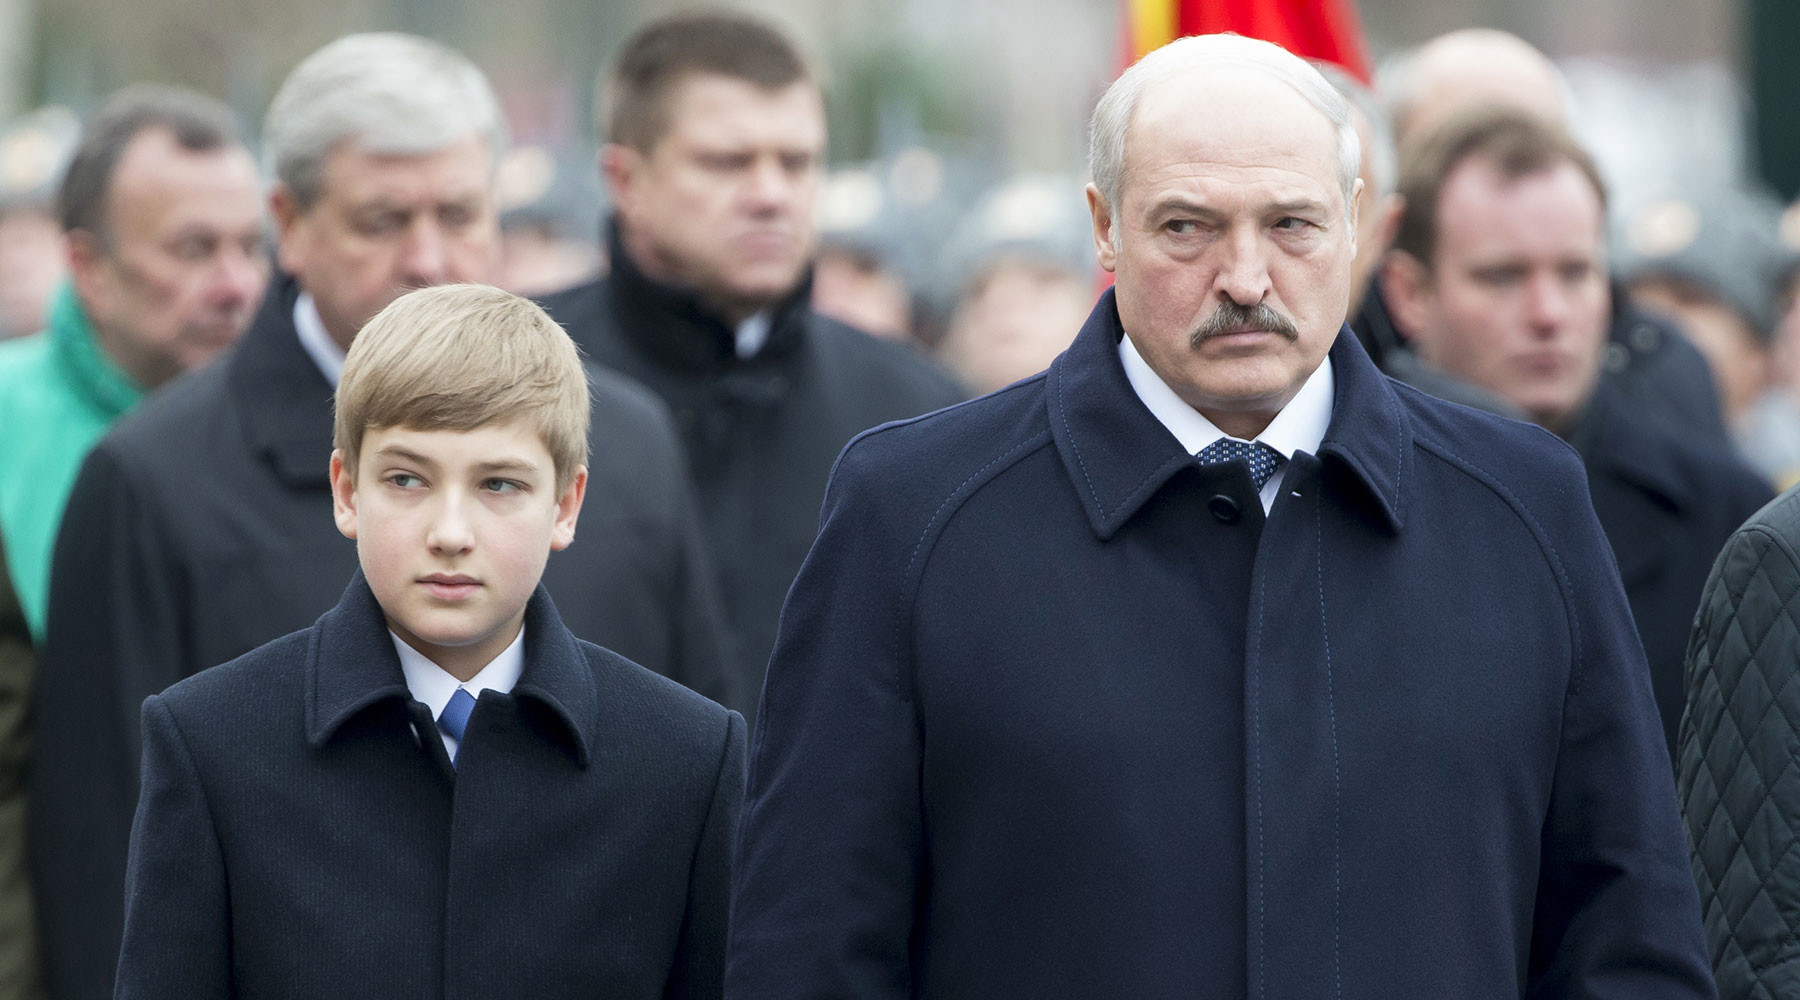 Коля Лукашенко внебрачный сын Лукашенко